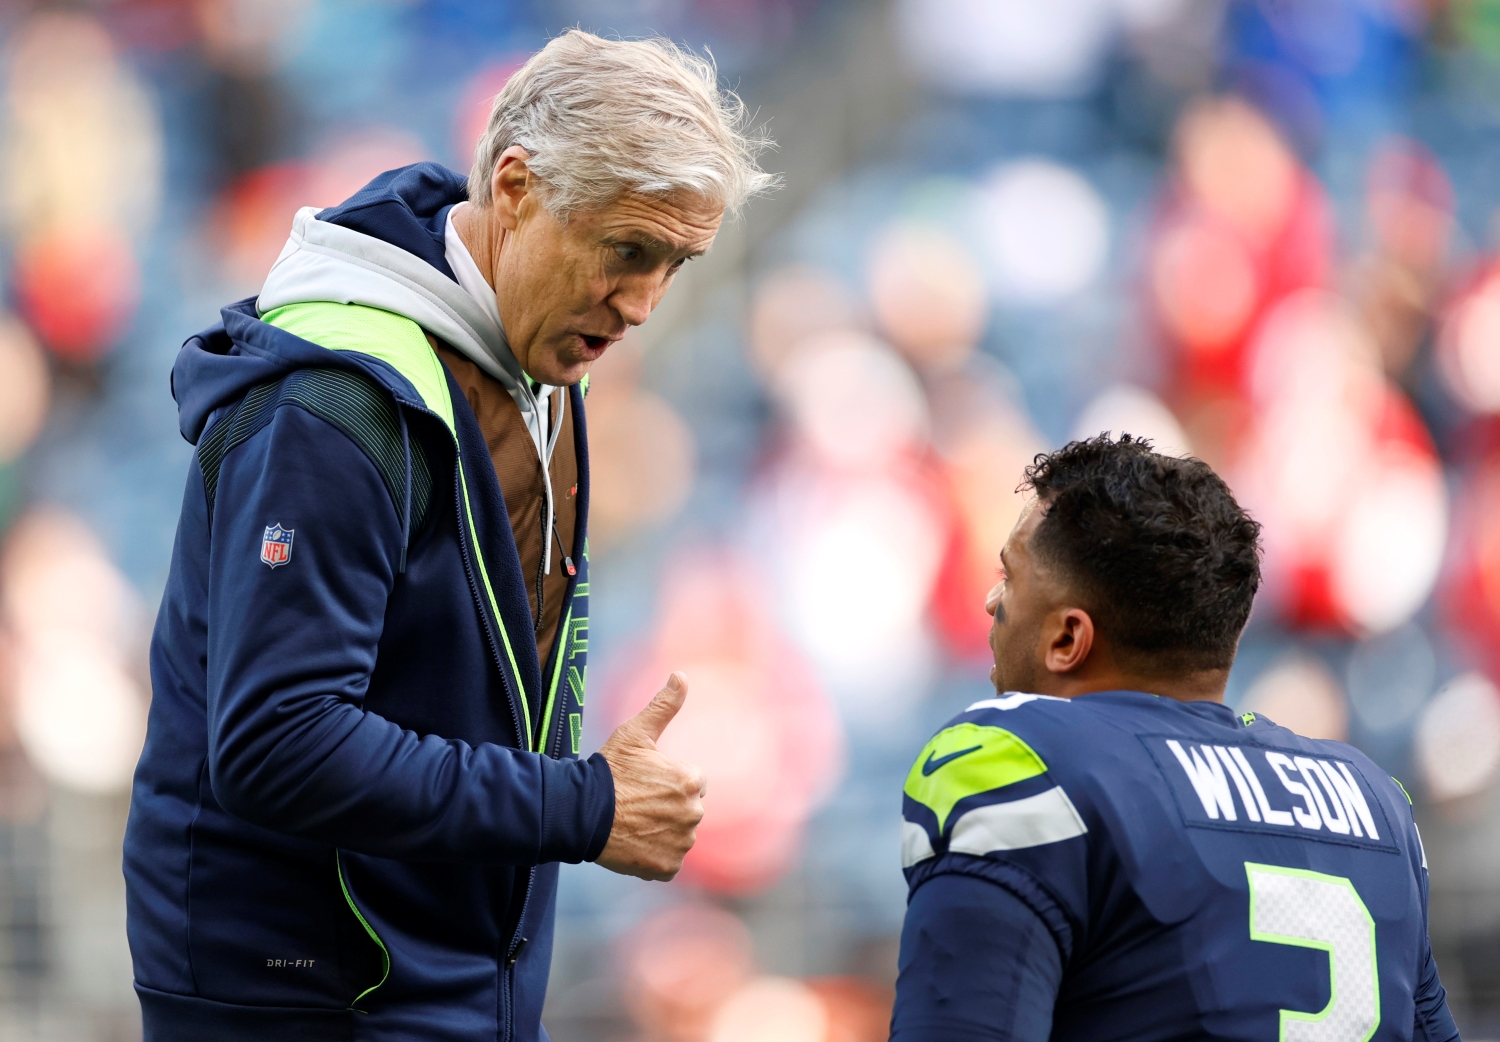 Seattle Seahawks head coach Pete Carroll speaks to quarterback Russell Wilson before a game.